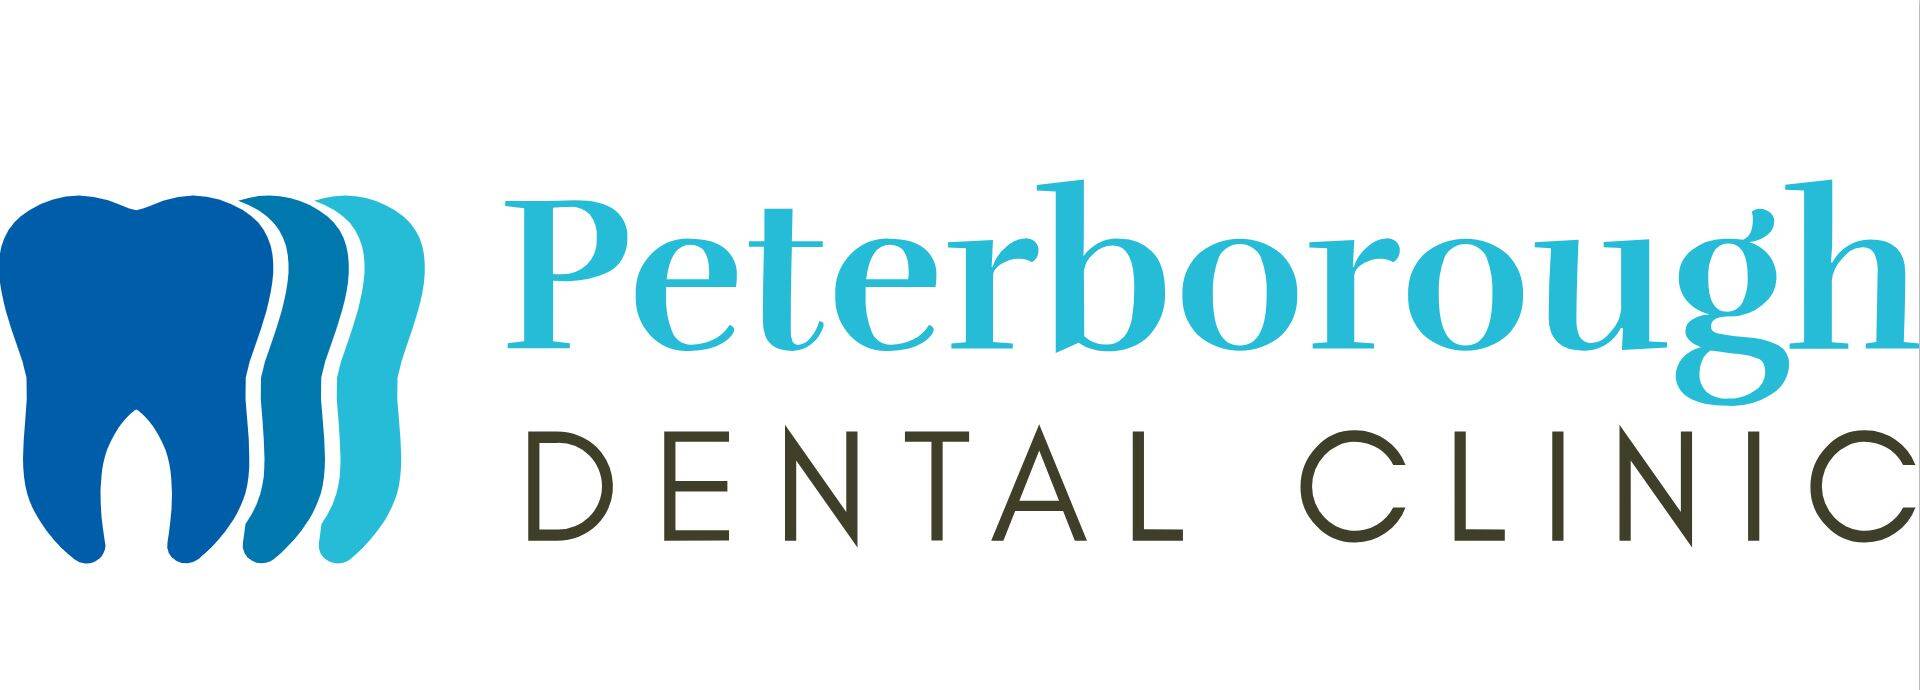 Peterborough Dental Clinic